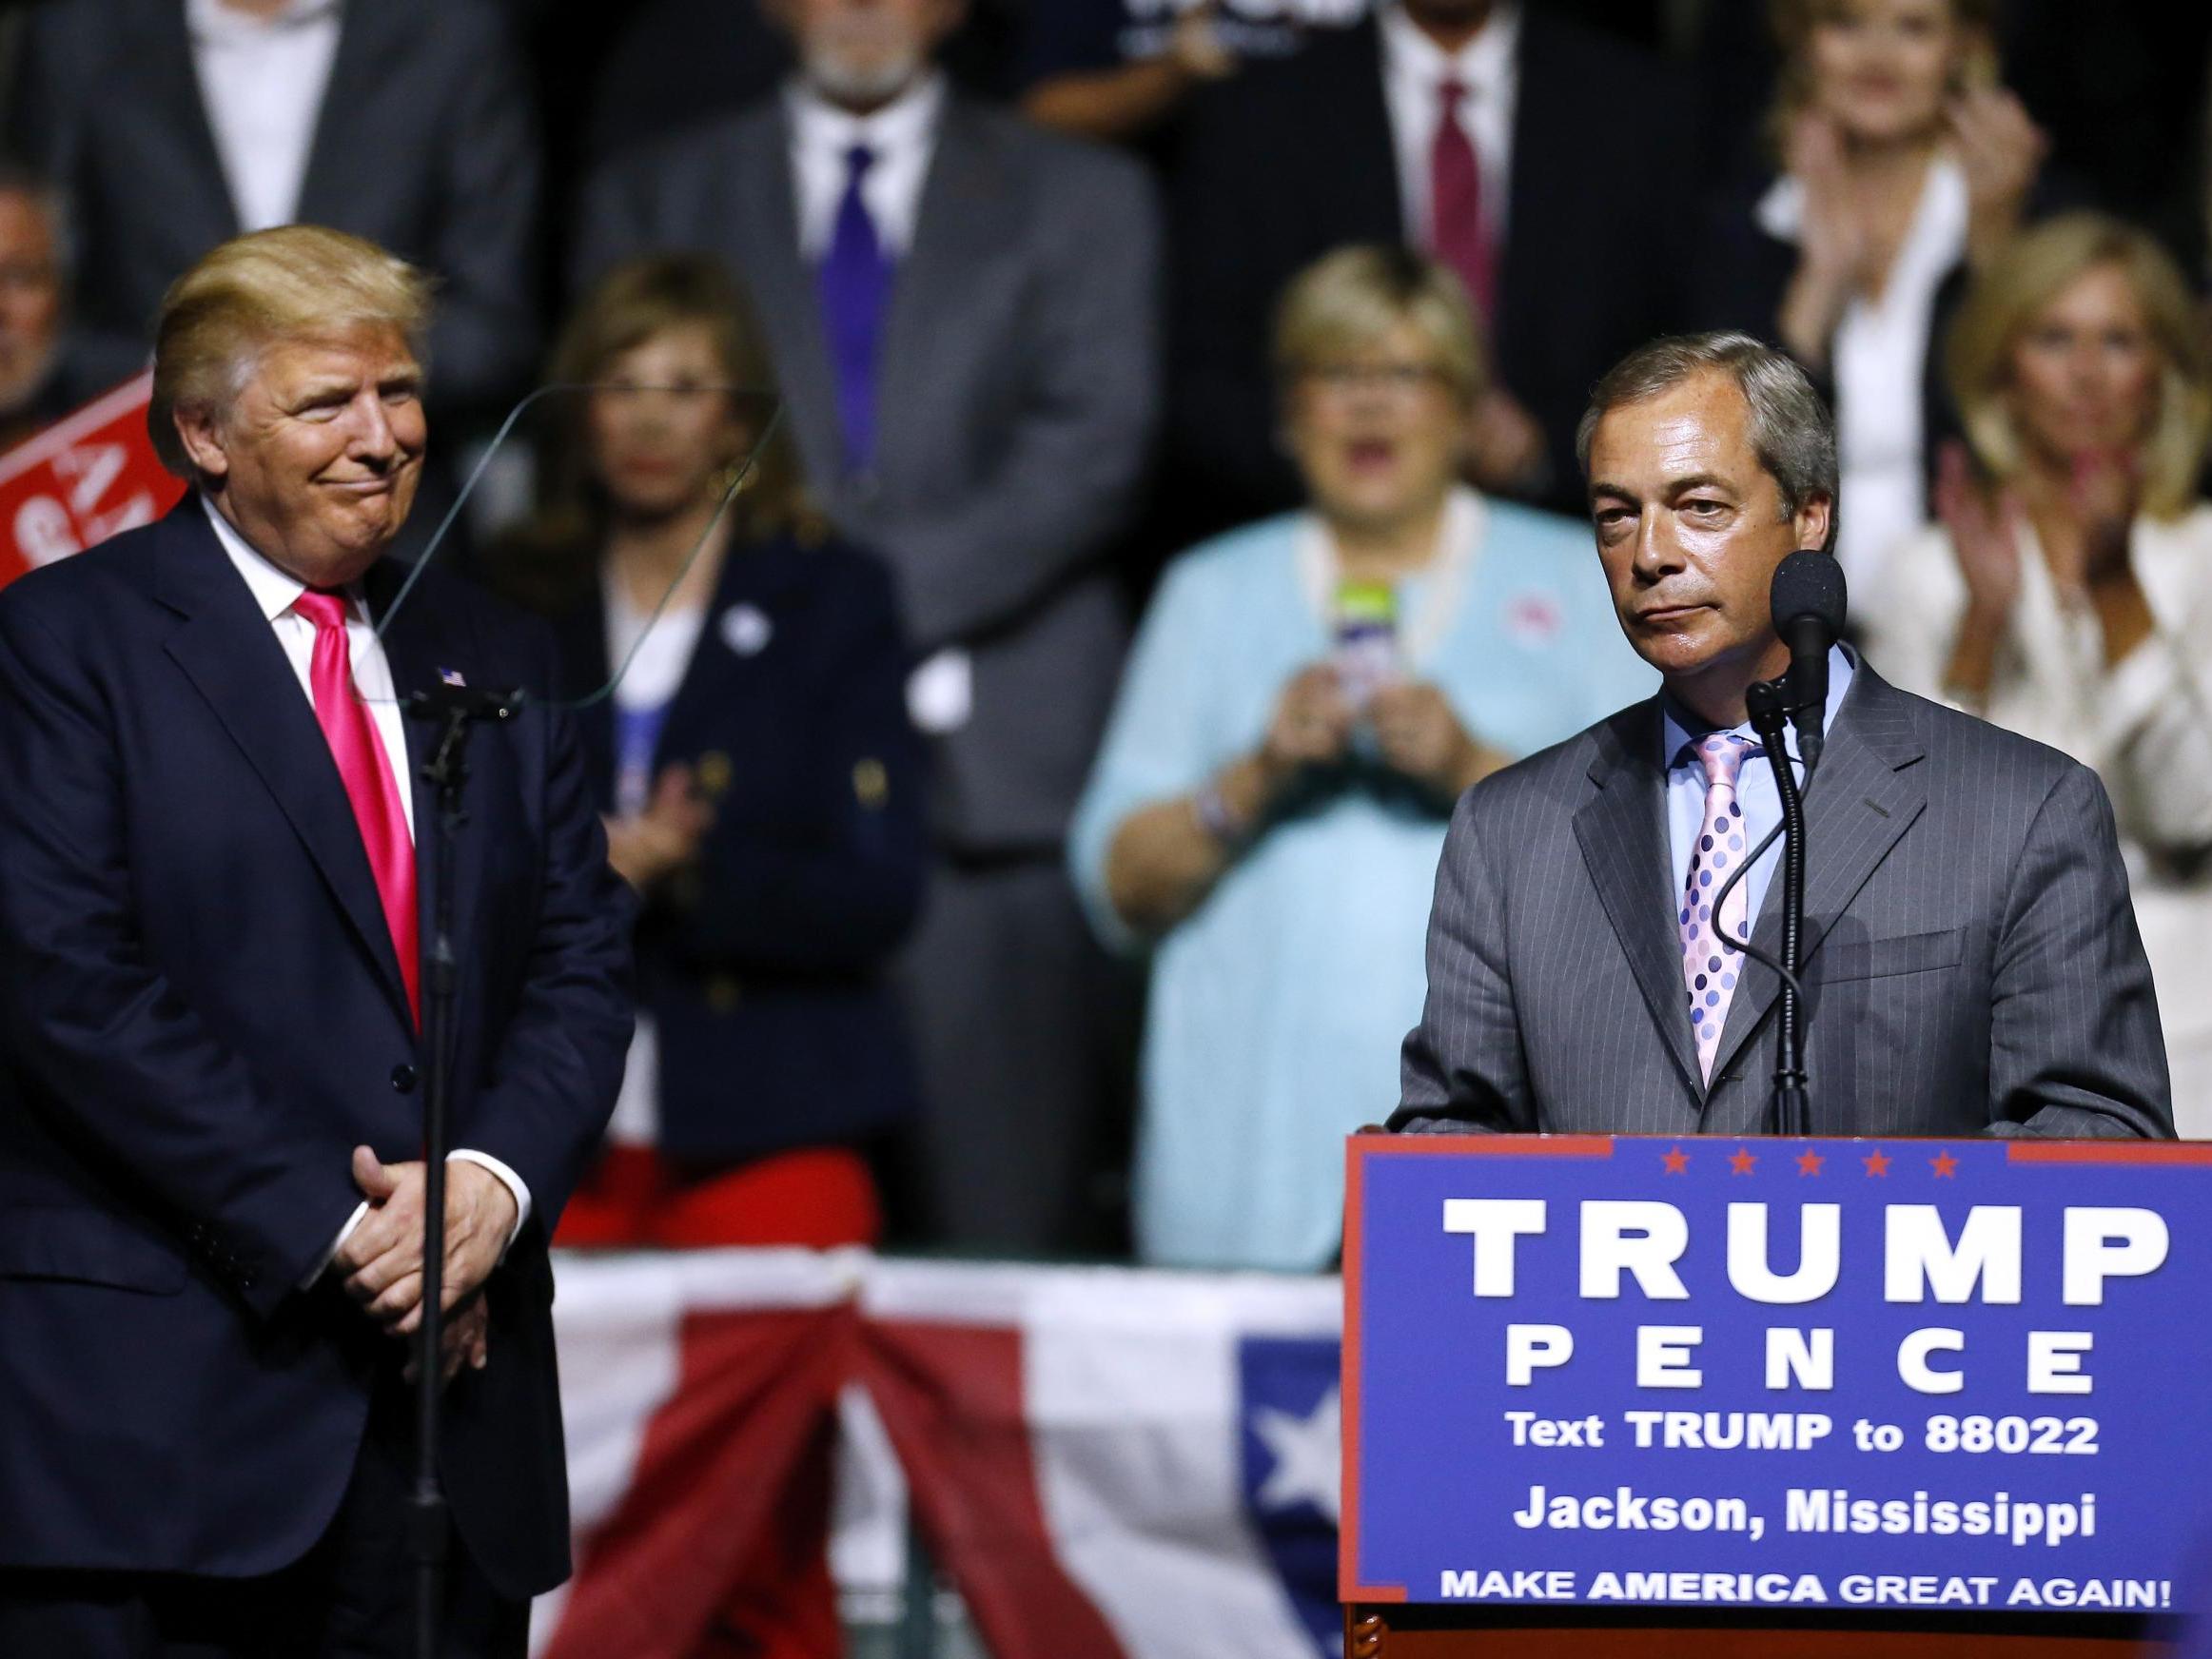 Ukip’s interim leader Nigel Farage speaks at a Donald Trump rally